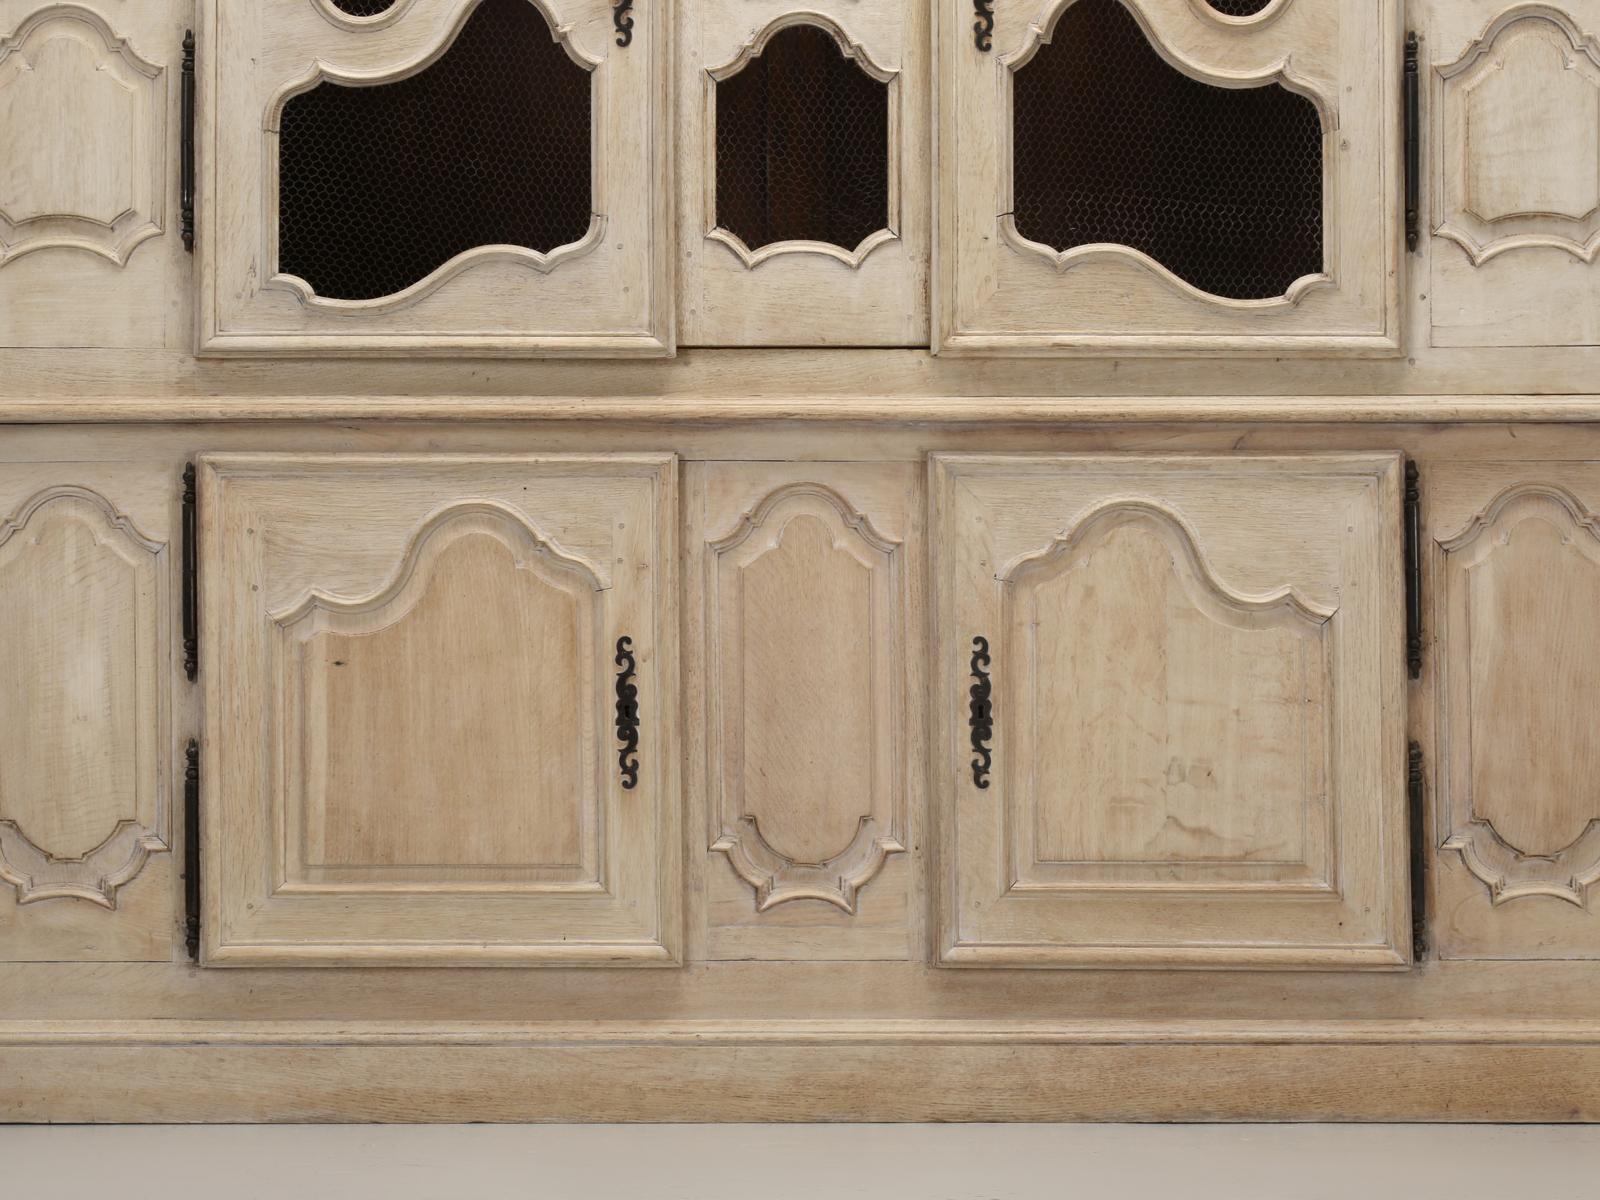 Antique French Bookcase or Cabinet in Limed White Oak Older Restoration c1800's For Sale 1